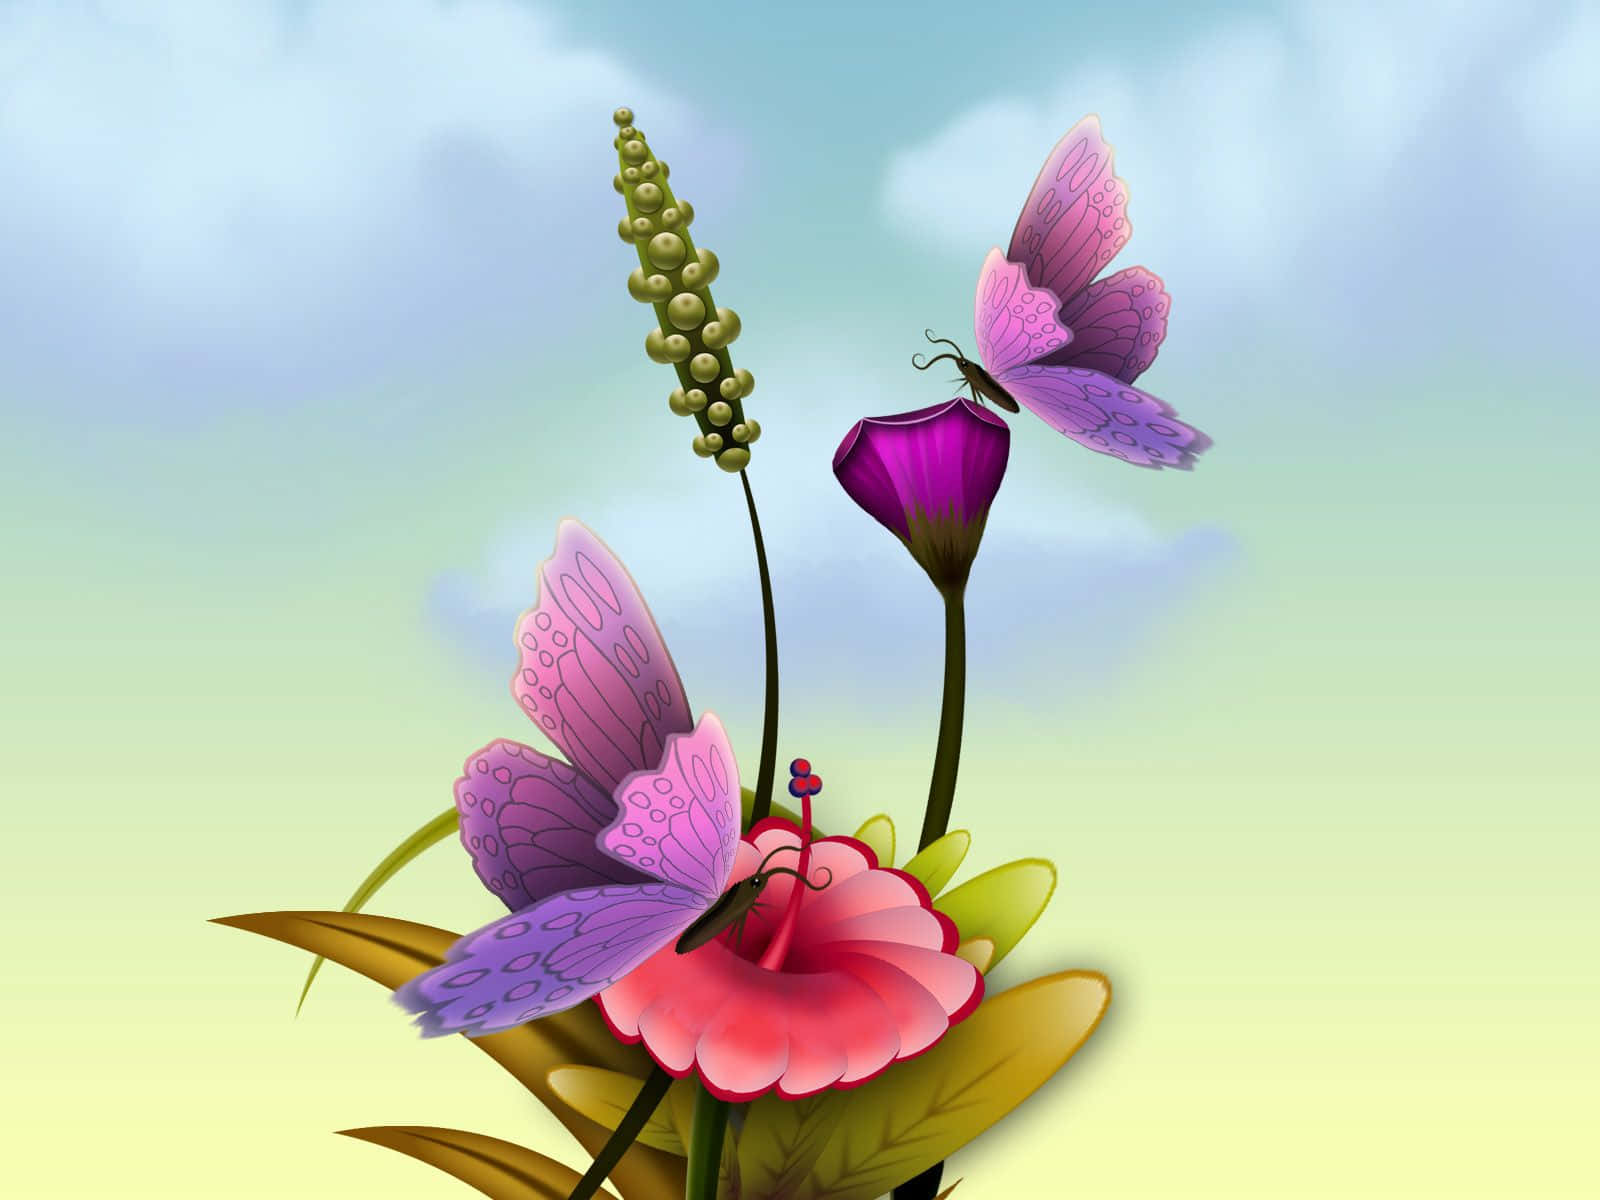 Colorful Spring Butterflies on Blooming Flowers Wallpaper